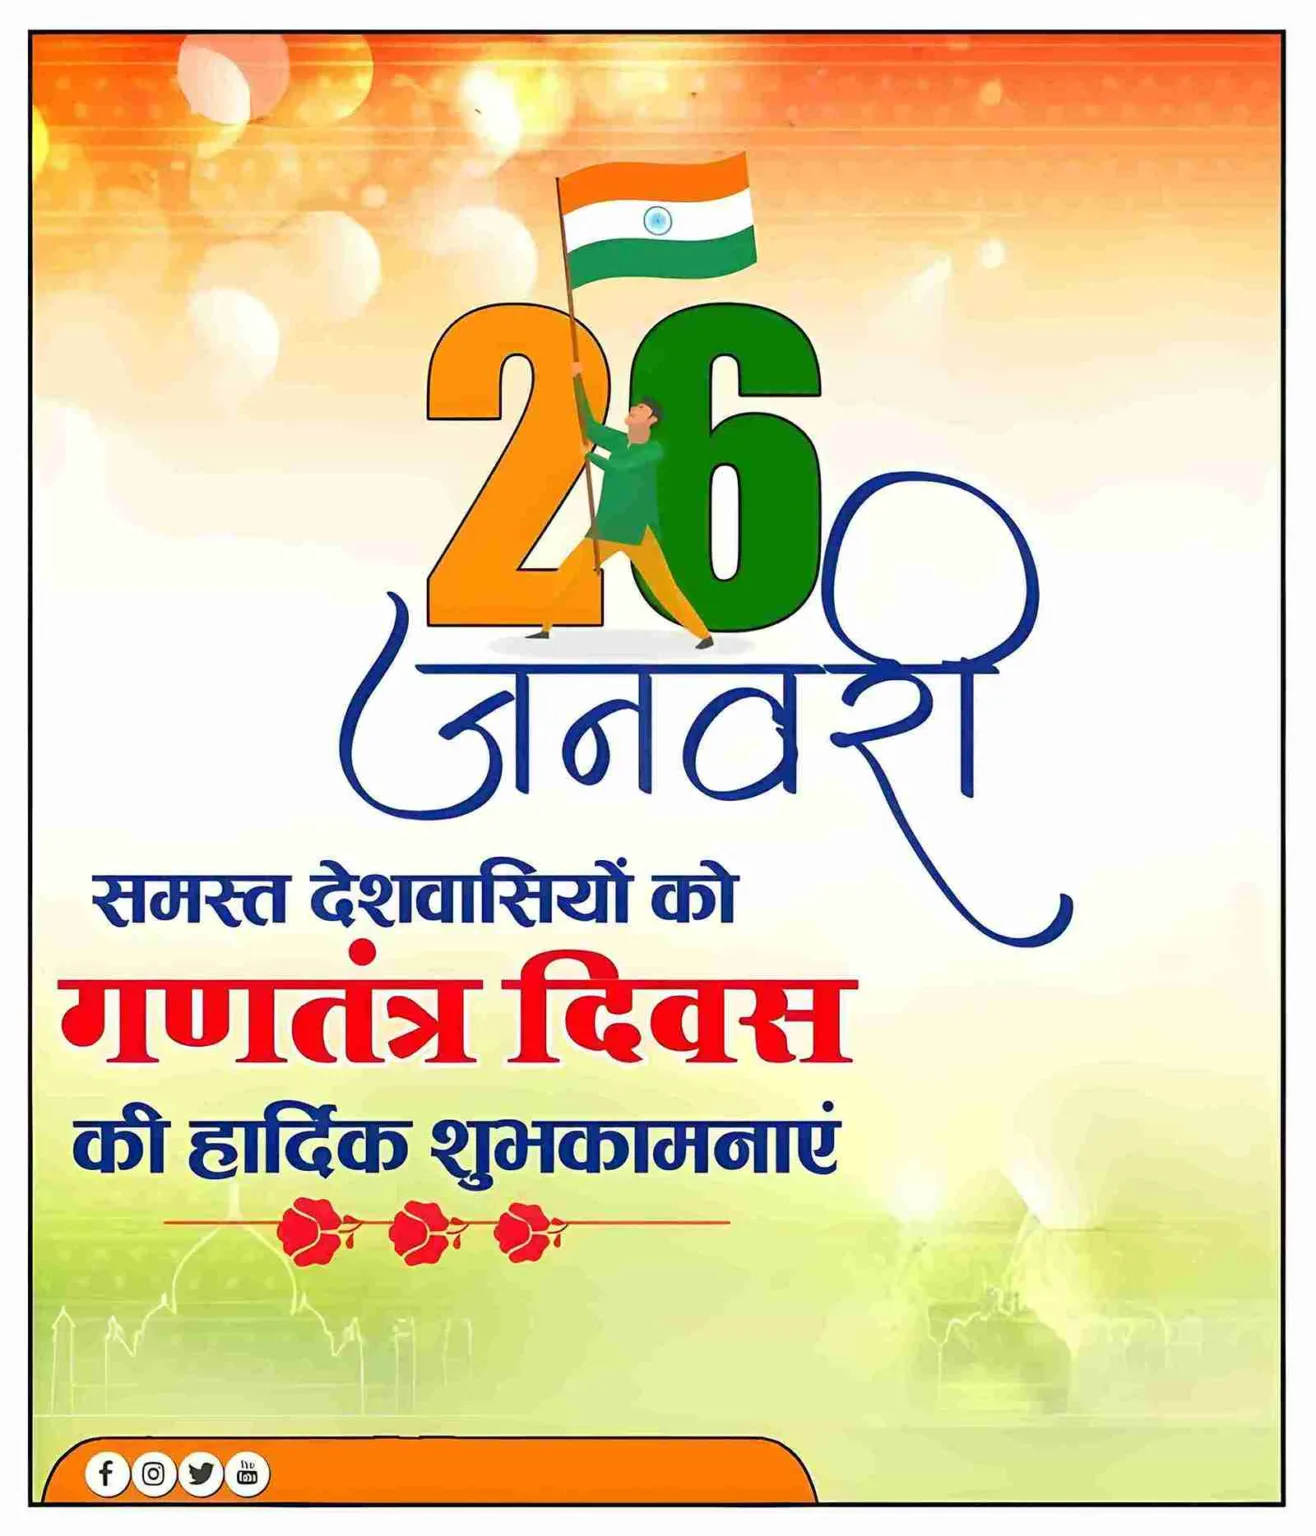 गणतंत्र दिवस की बधाई (Republic Day wishes banner background)